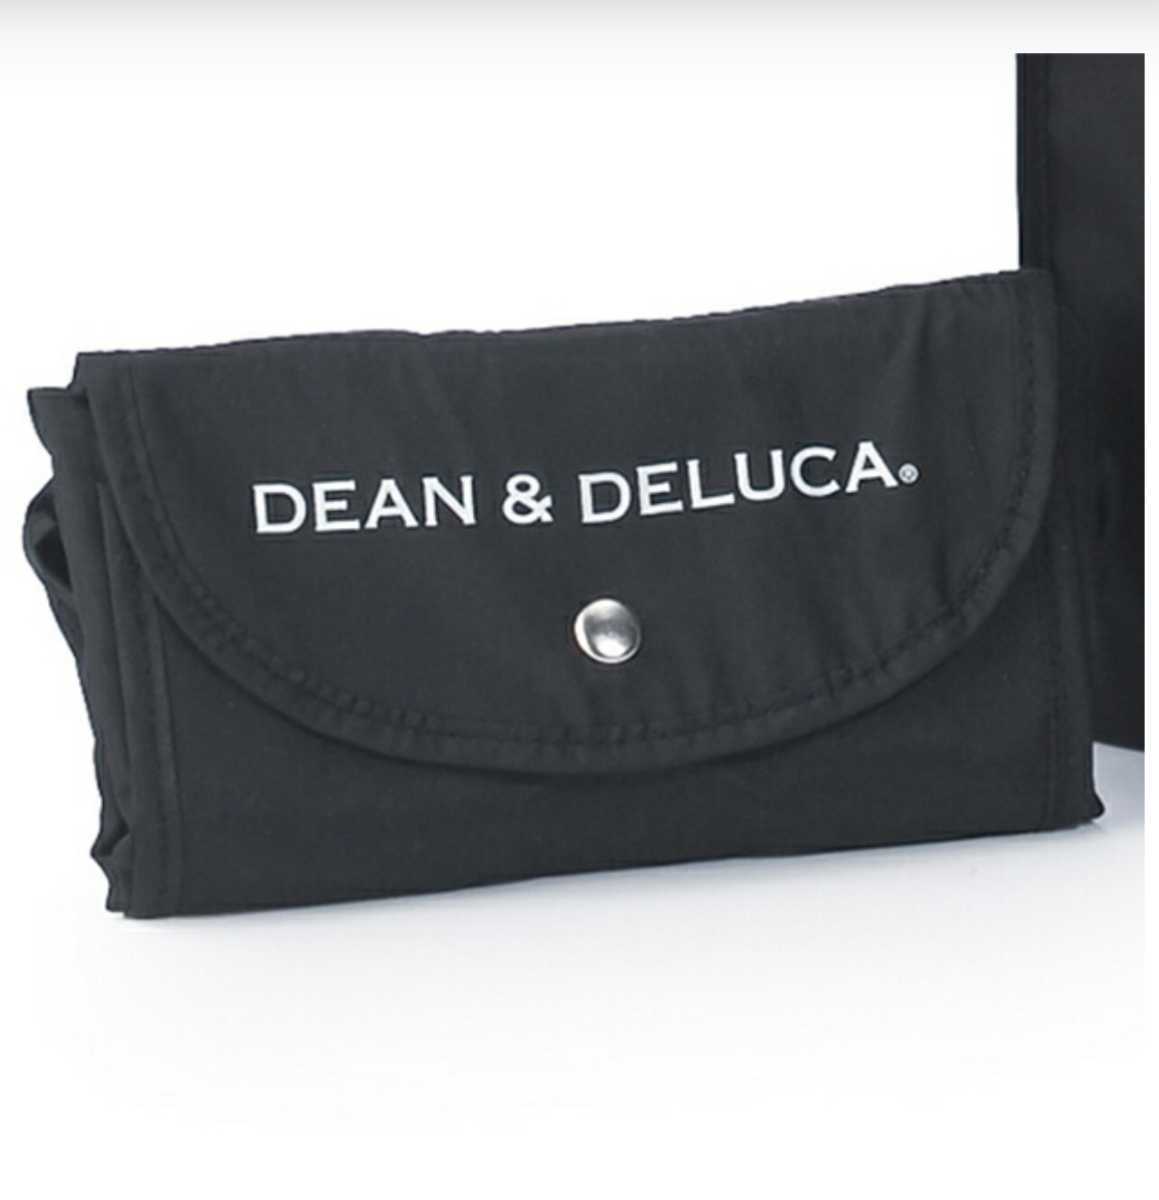 DEAN&DELUCA ショッピングバッグ ブラック 黒 エコバッグ トートバッグ 折りたたみ Dean & Deluca black ディーン&デルーカ 